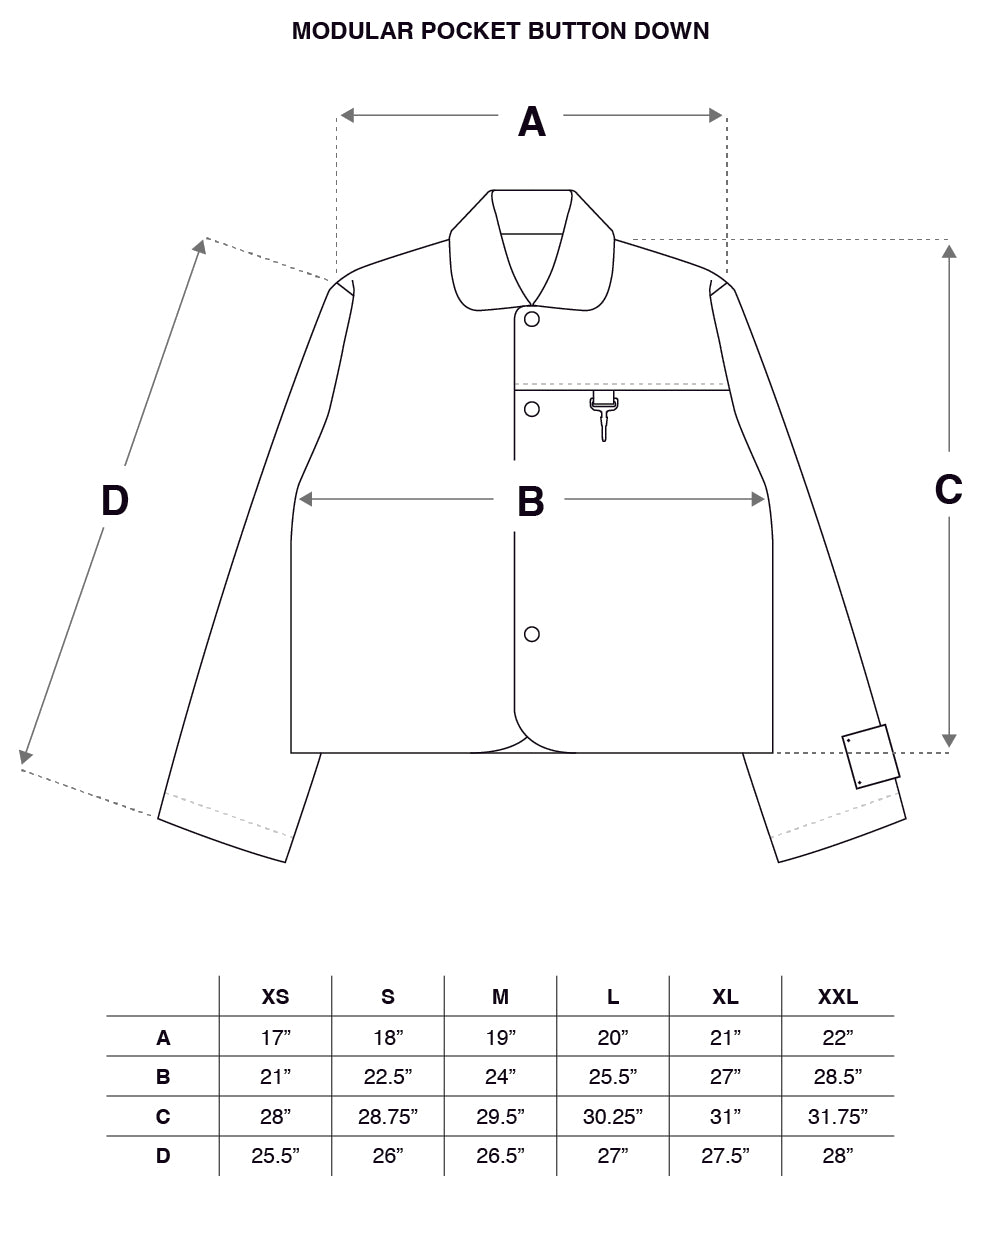 Modular Pocket Cotton Ripstop Button Down Shirt in Camo Size Guide